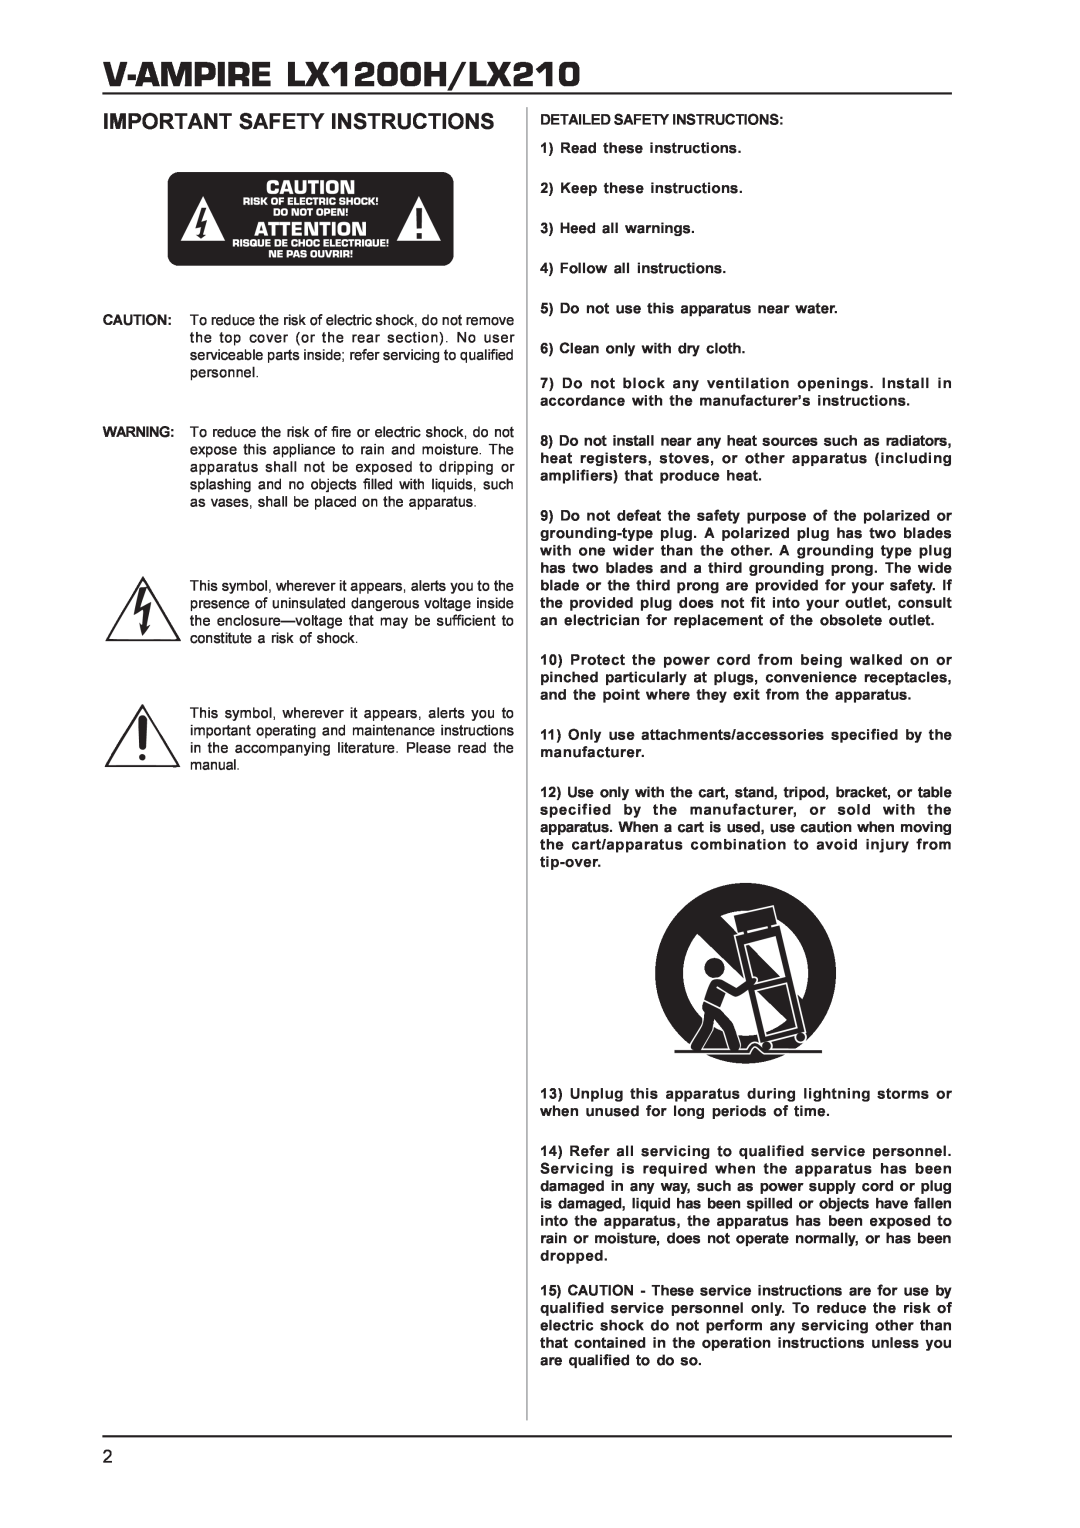 Behringer manual V-AMPIRELX1200H/LX210, Important Safety Instructions 